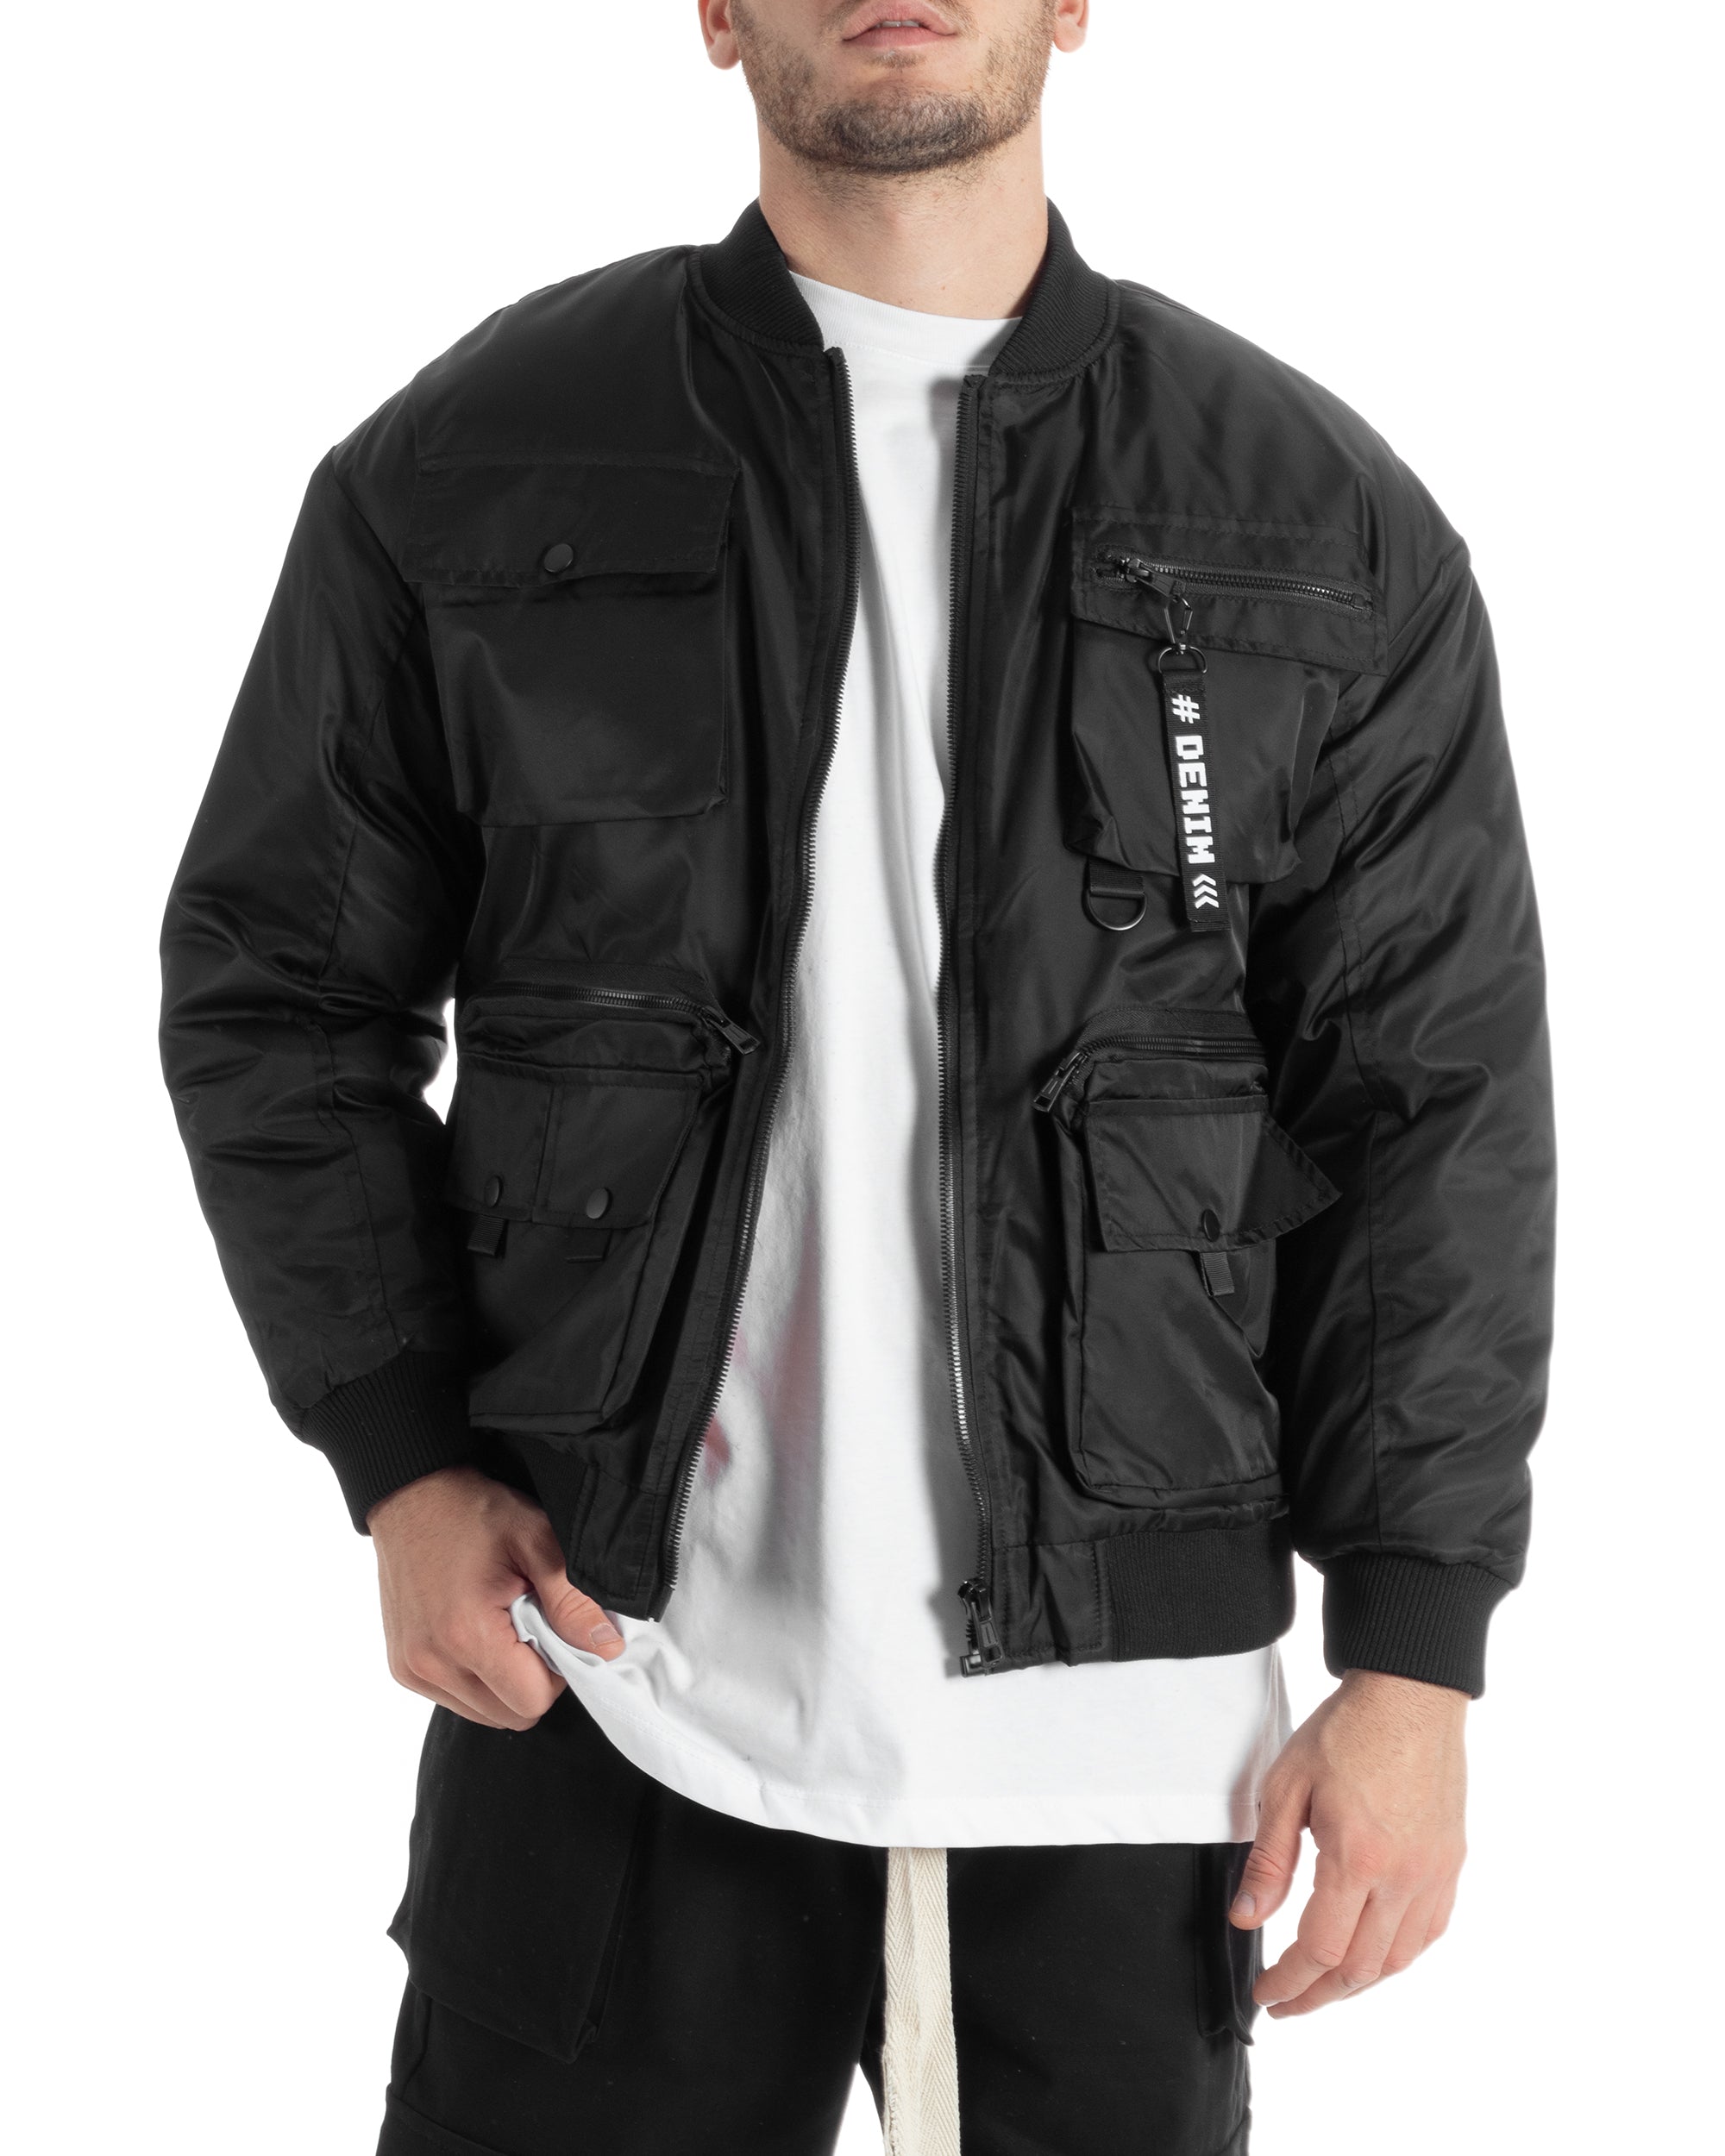 Men's College Jacket Two-Tone Varsity Jacket Black White GIOSAL-G3030A